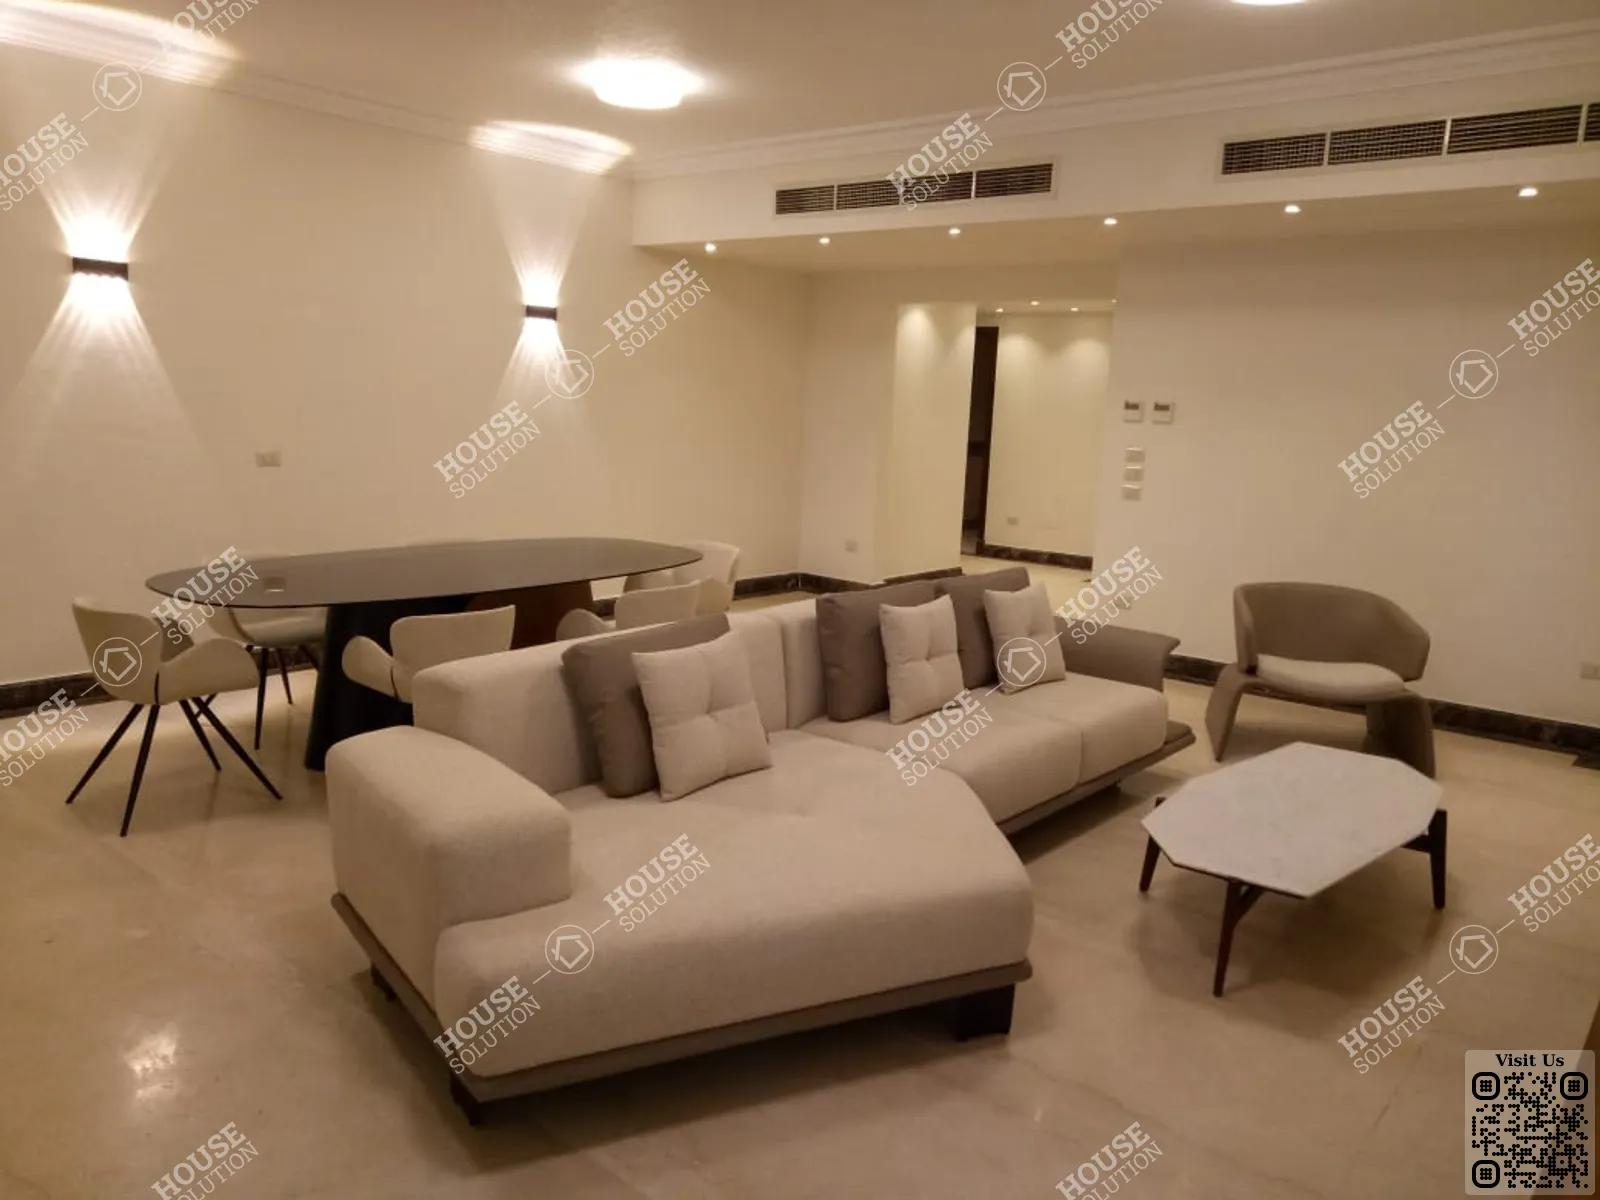 RECEPTION  @ Ground Floors For Rent In Maadi Maadi Sarayat Area: 290 m² consists of 3 Bedrooms 3 Bathrooms Modern furnished 5 stars #5784-0